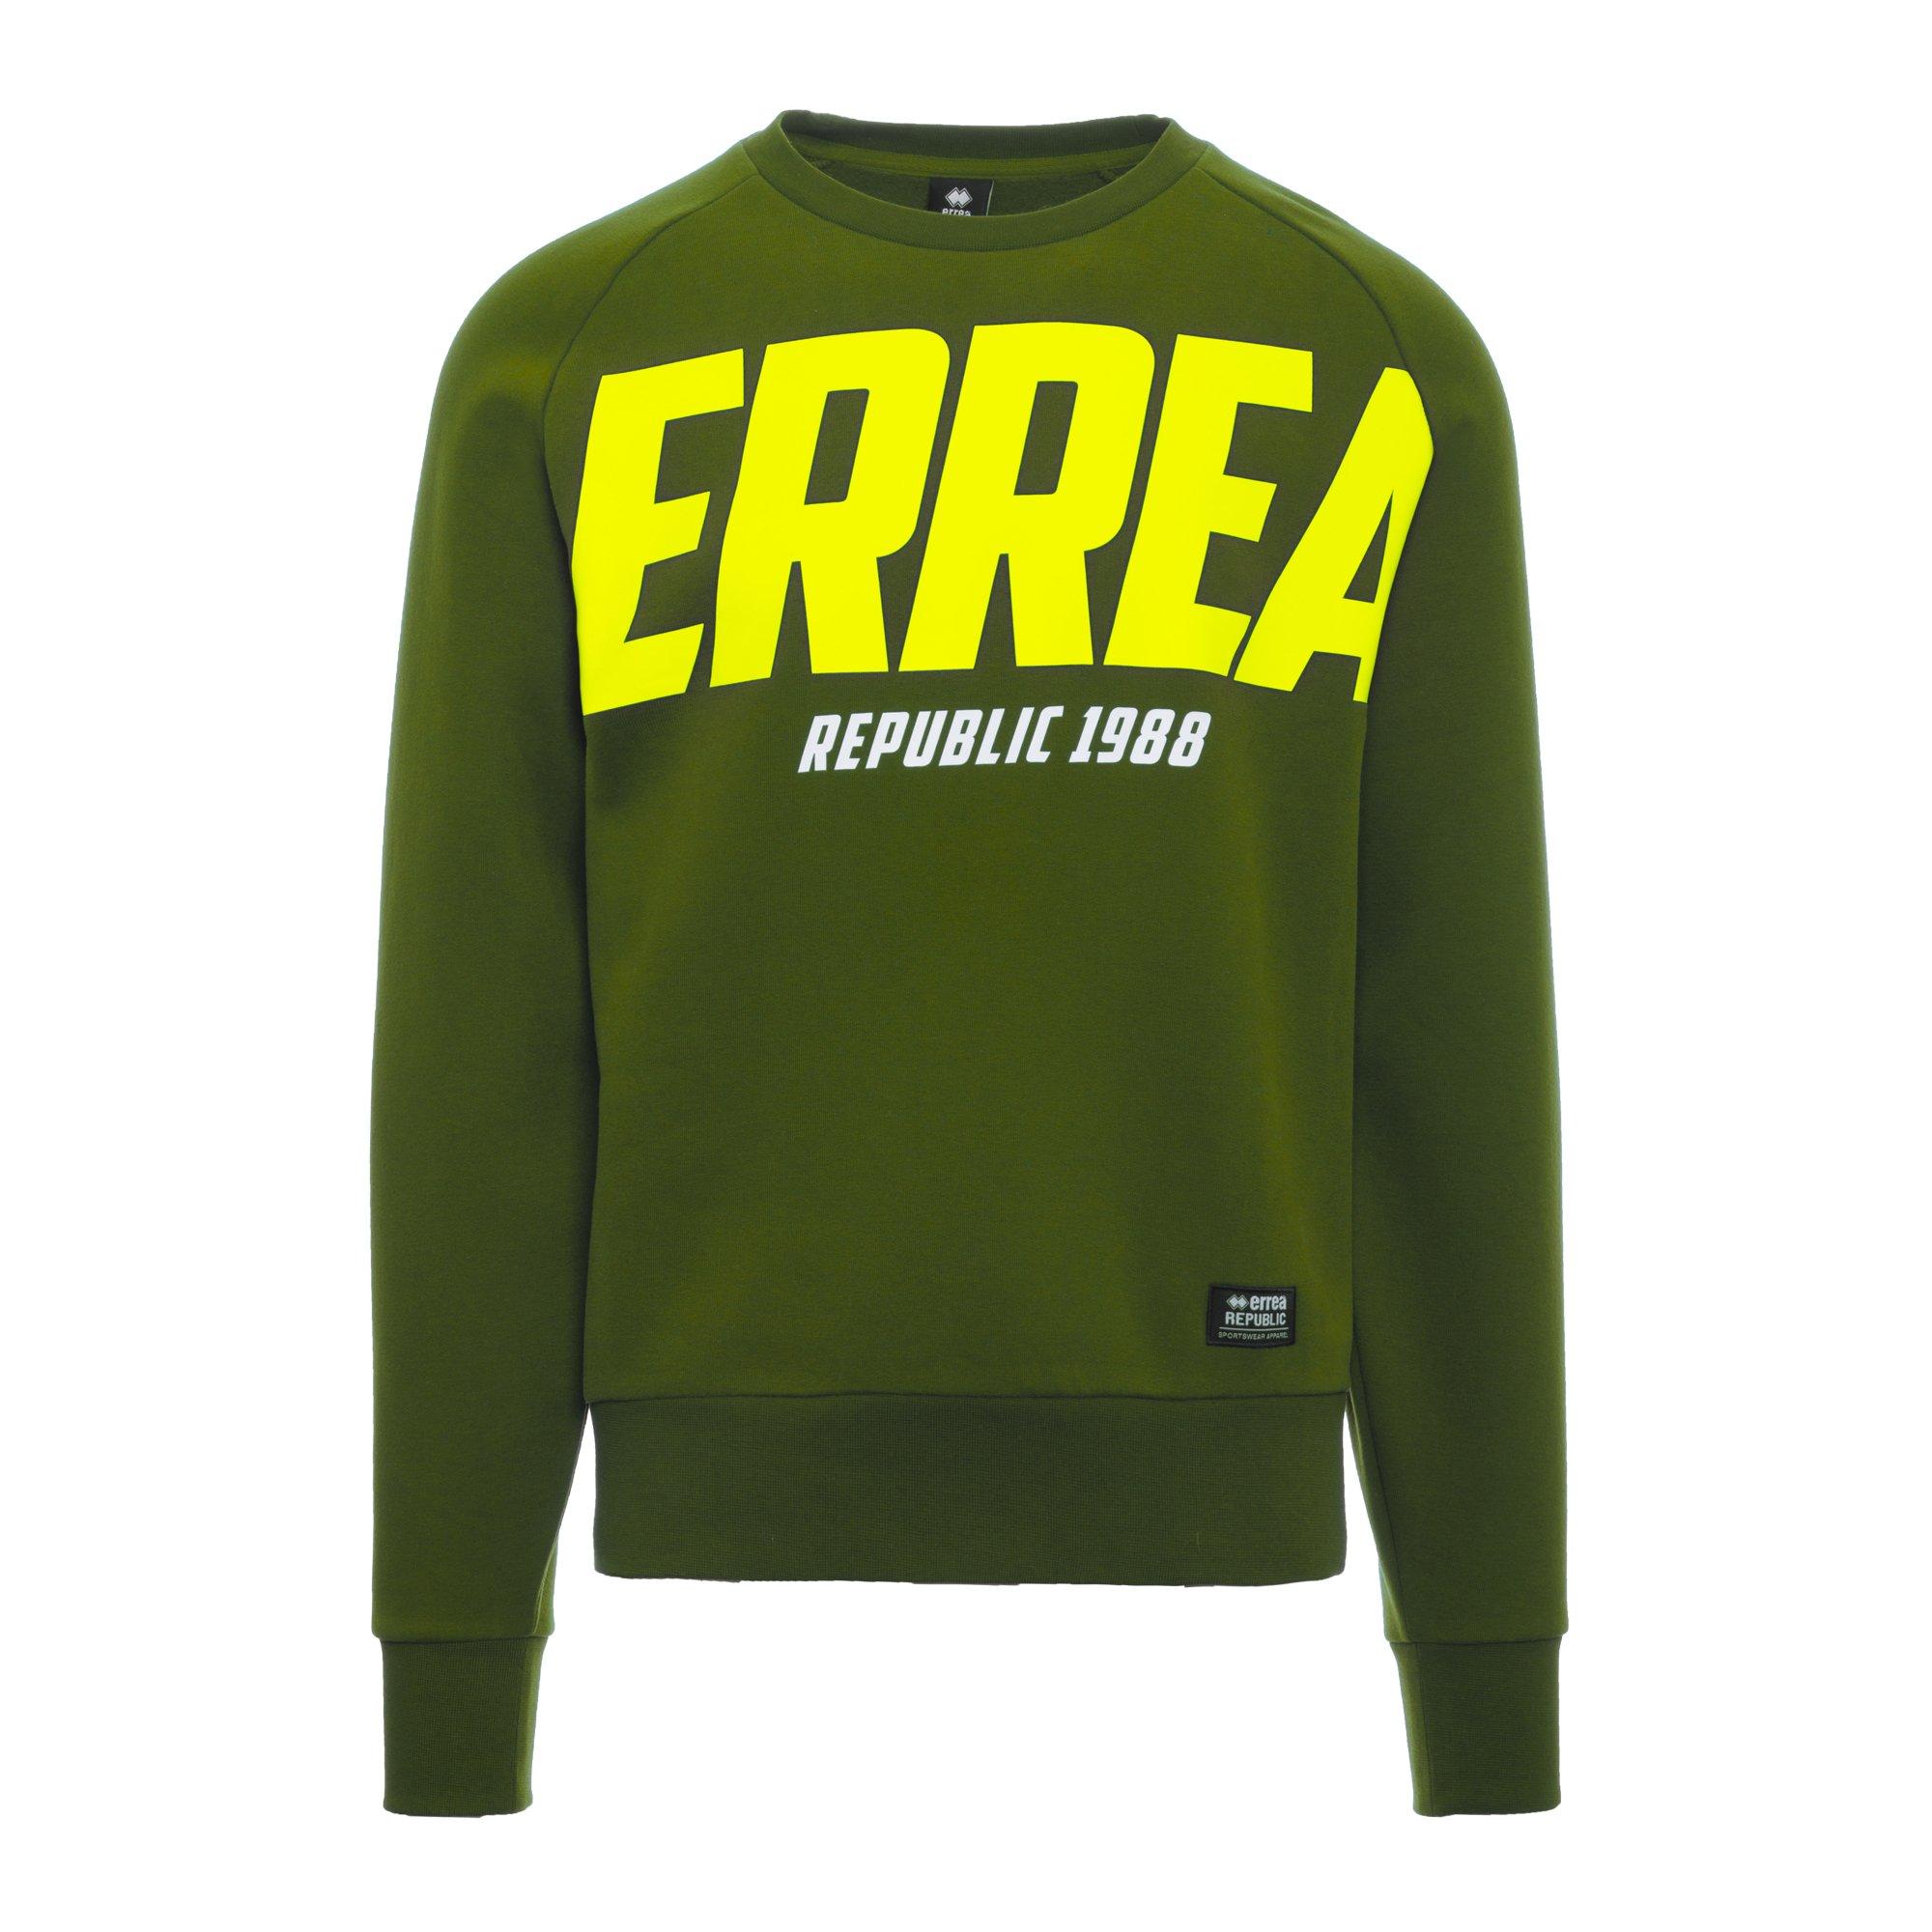 errea  sweatshirt graphic 